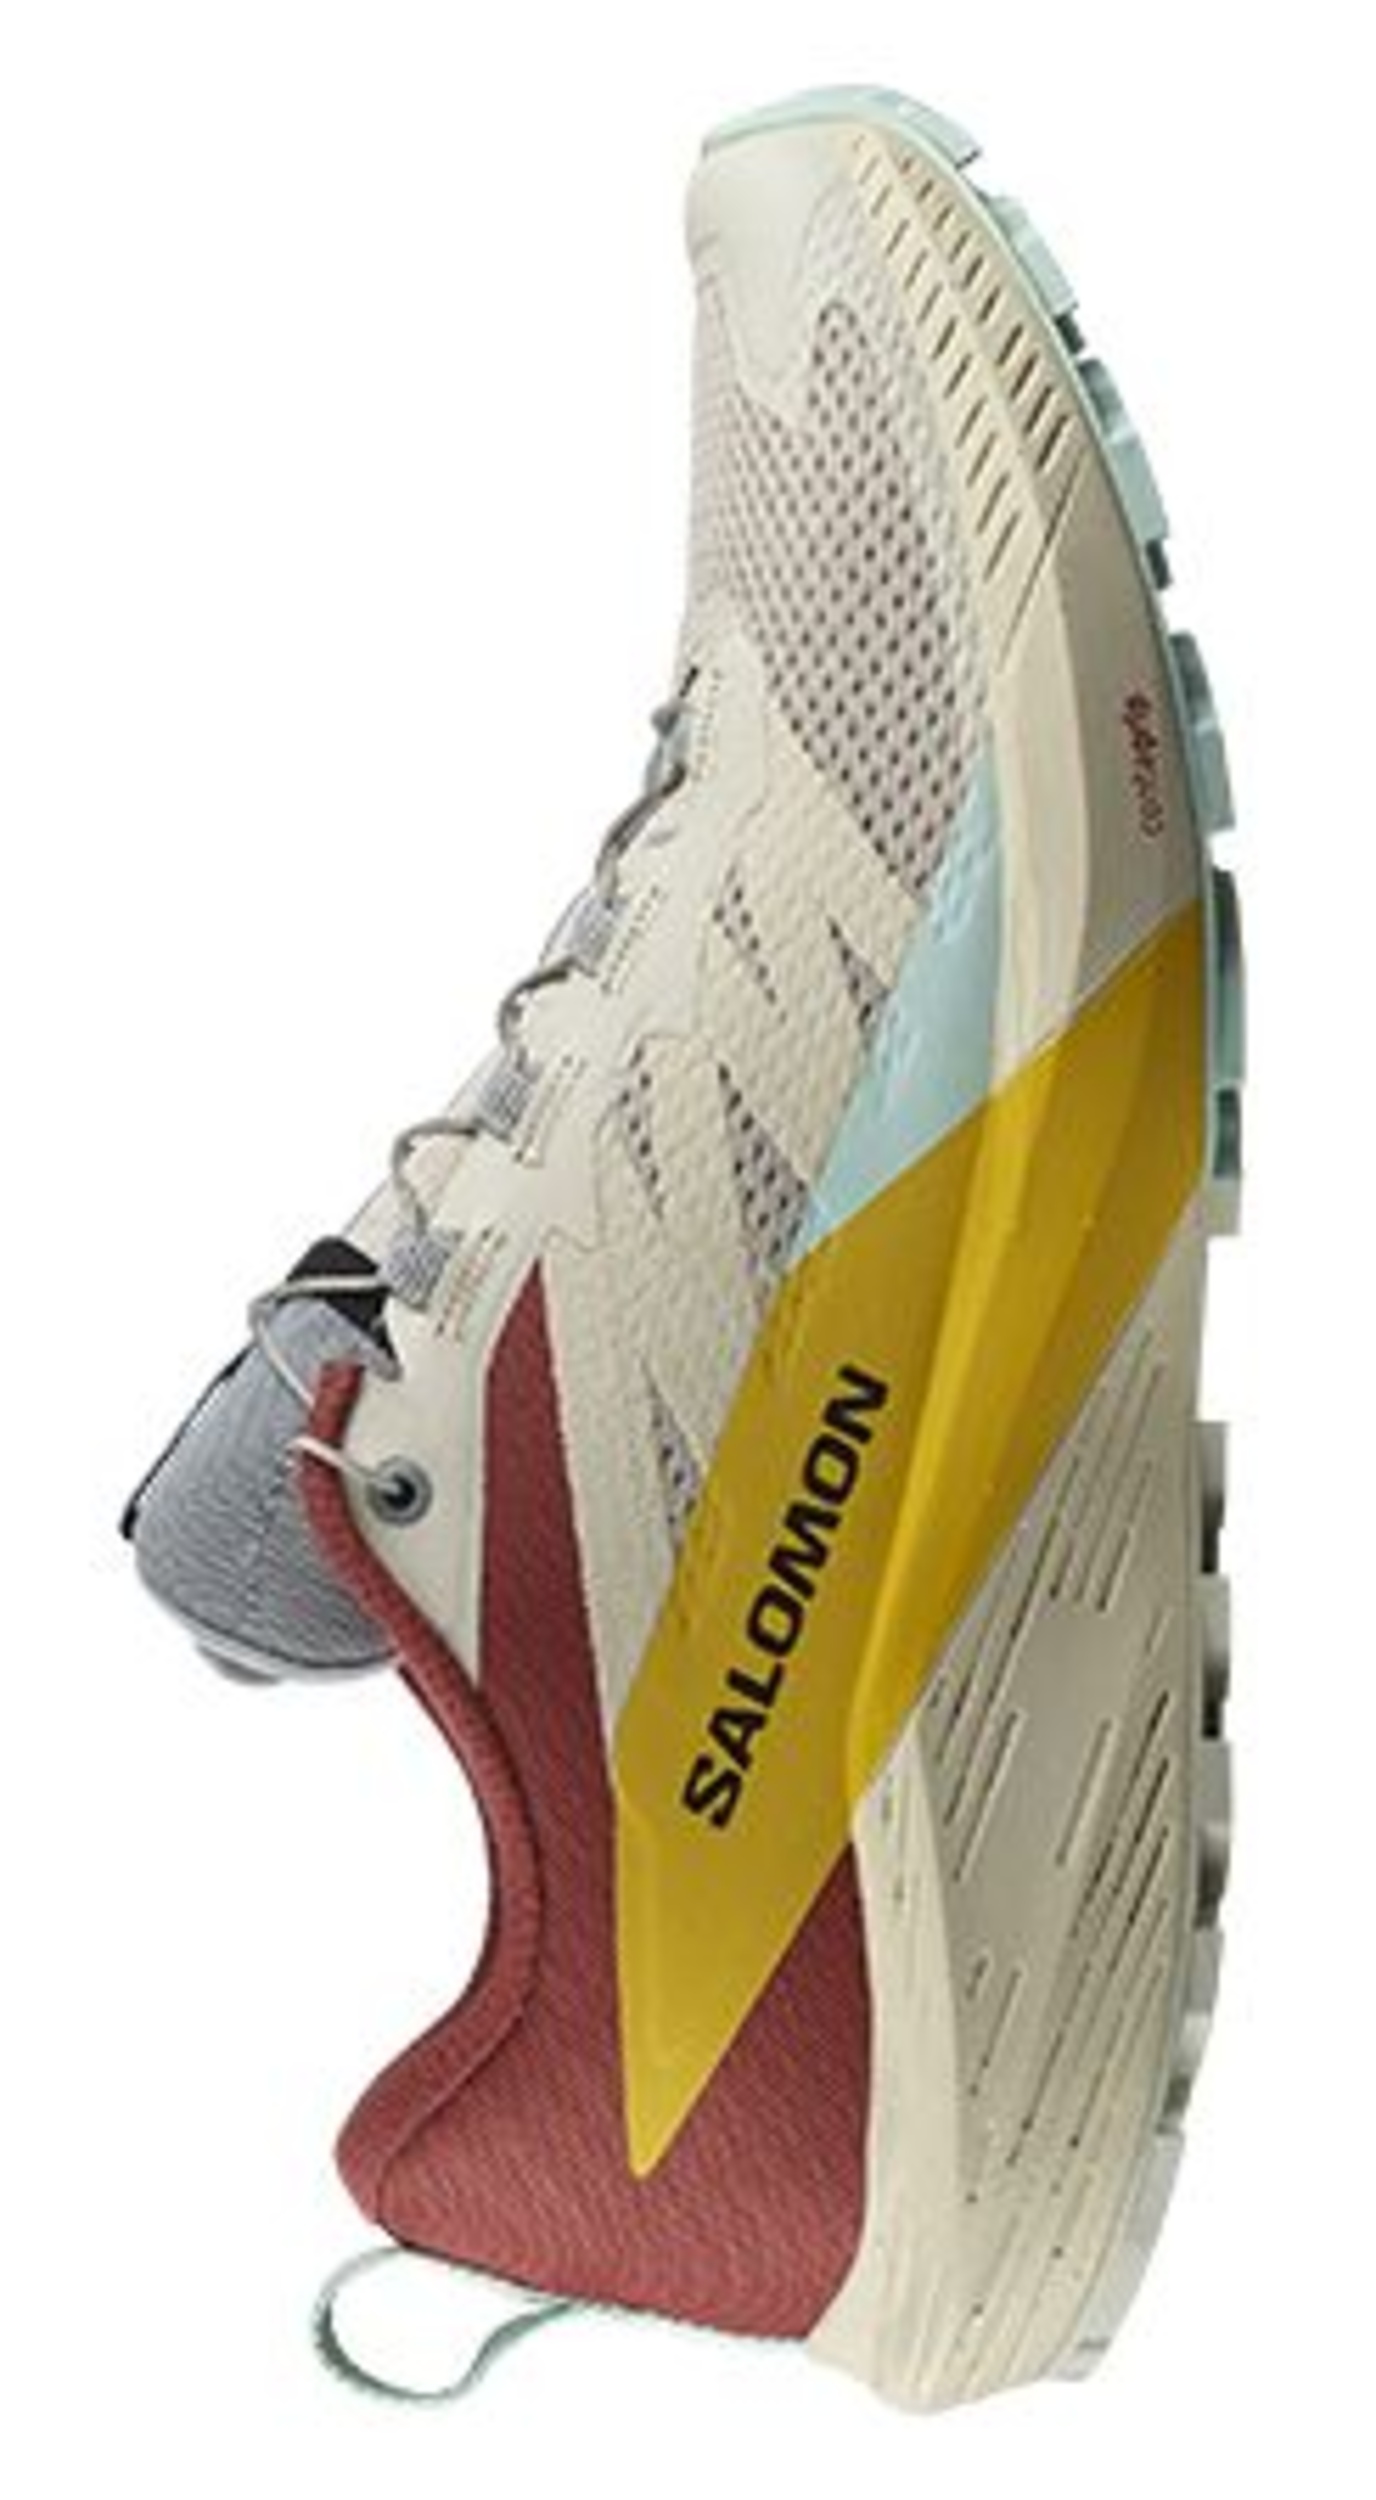 Salomon Men's Sense Ride 5 Trail Running Shoes | Sportchek